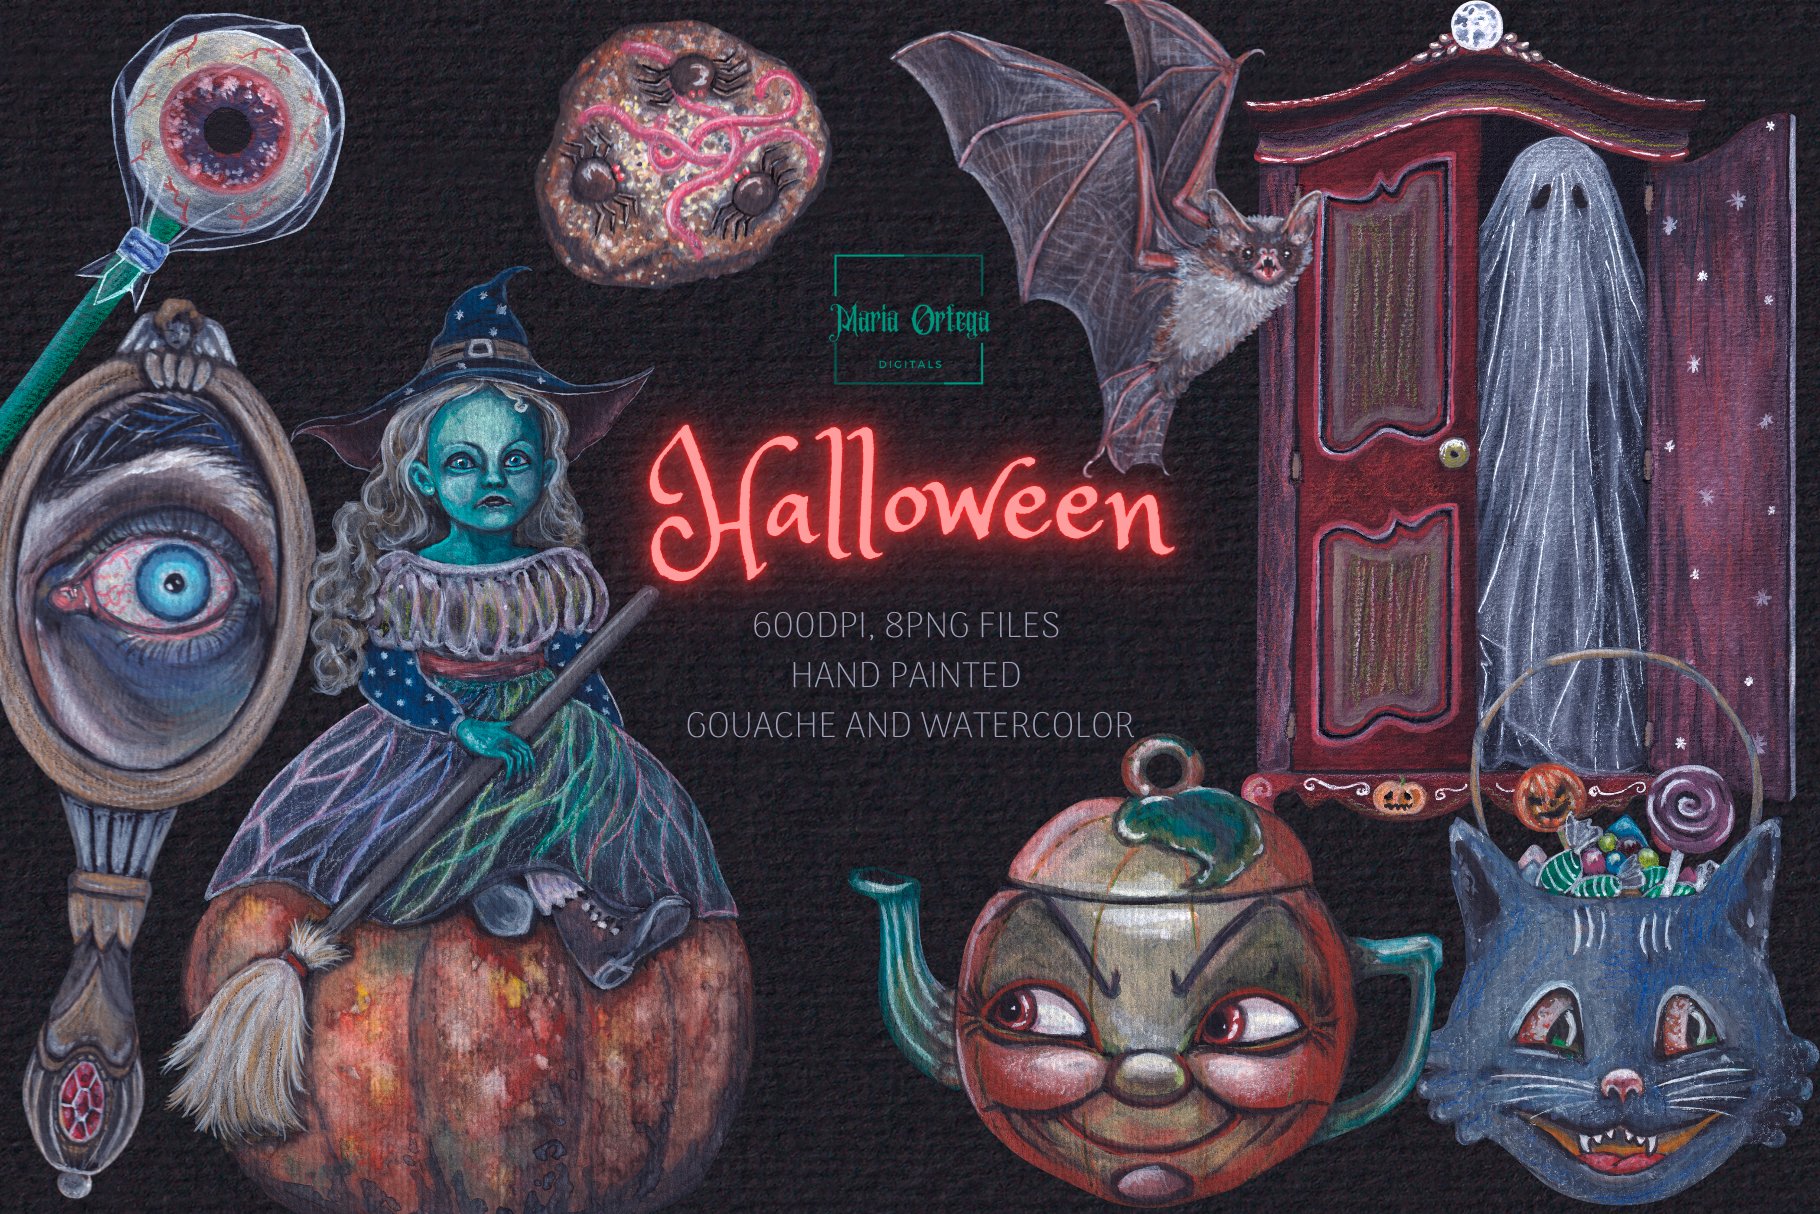 Halloween Ephemera: A Halloween Themed Collection of Authentic